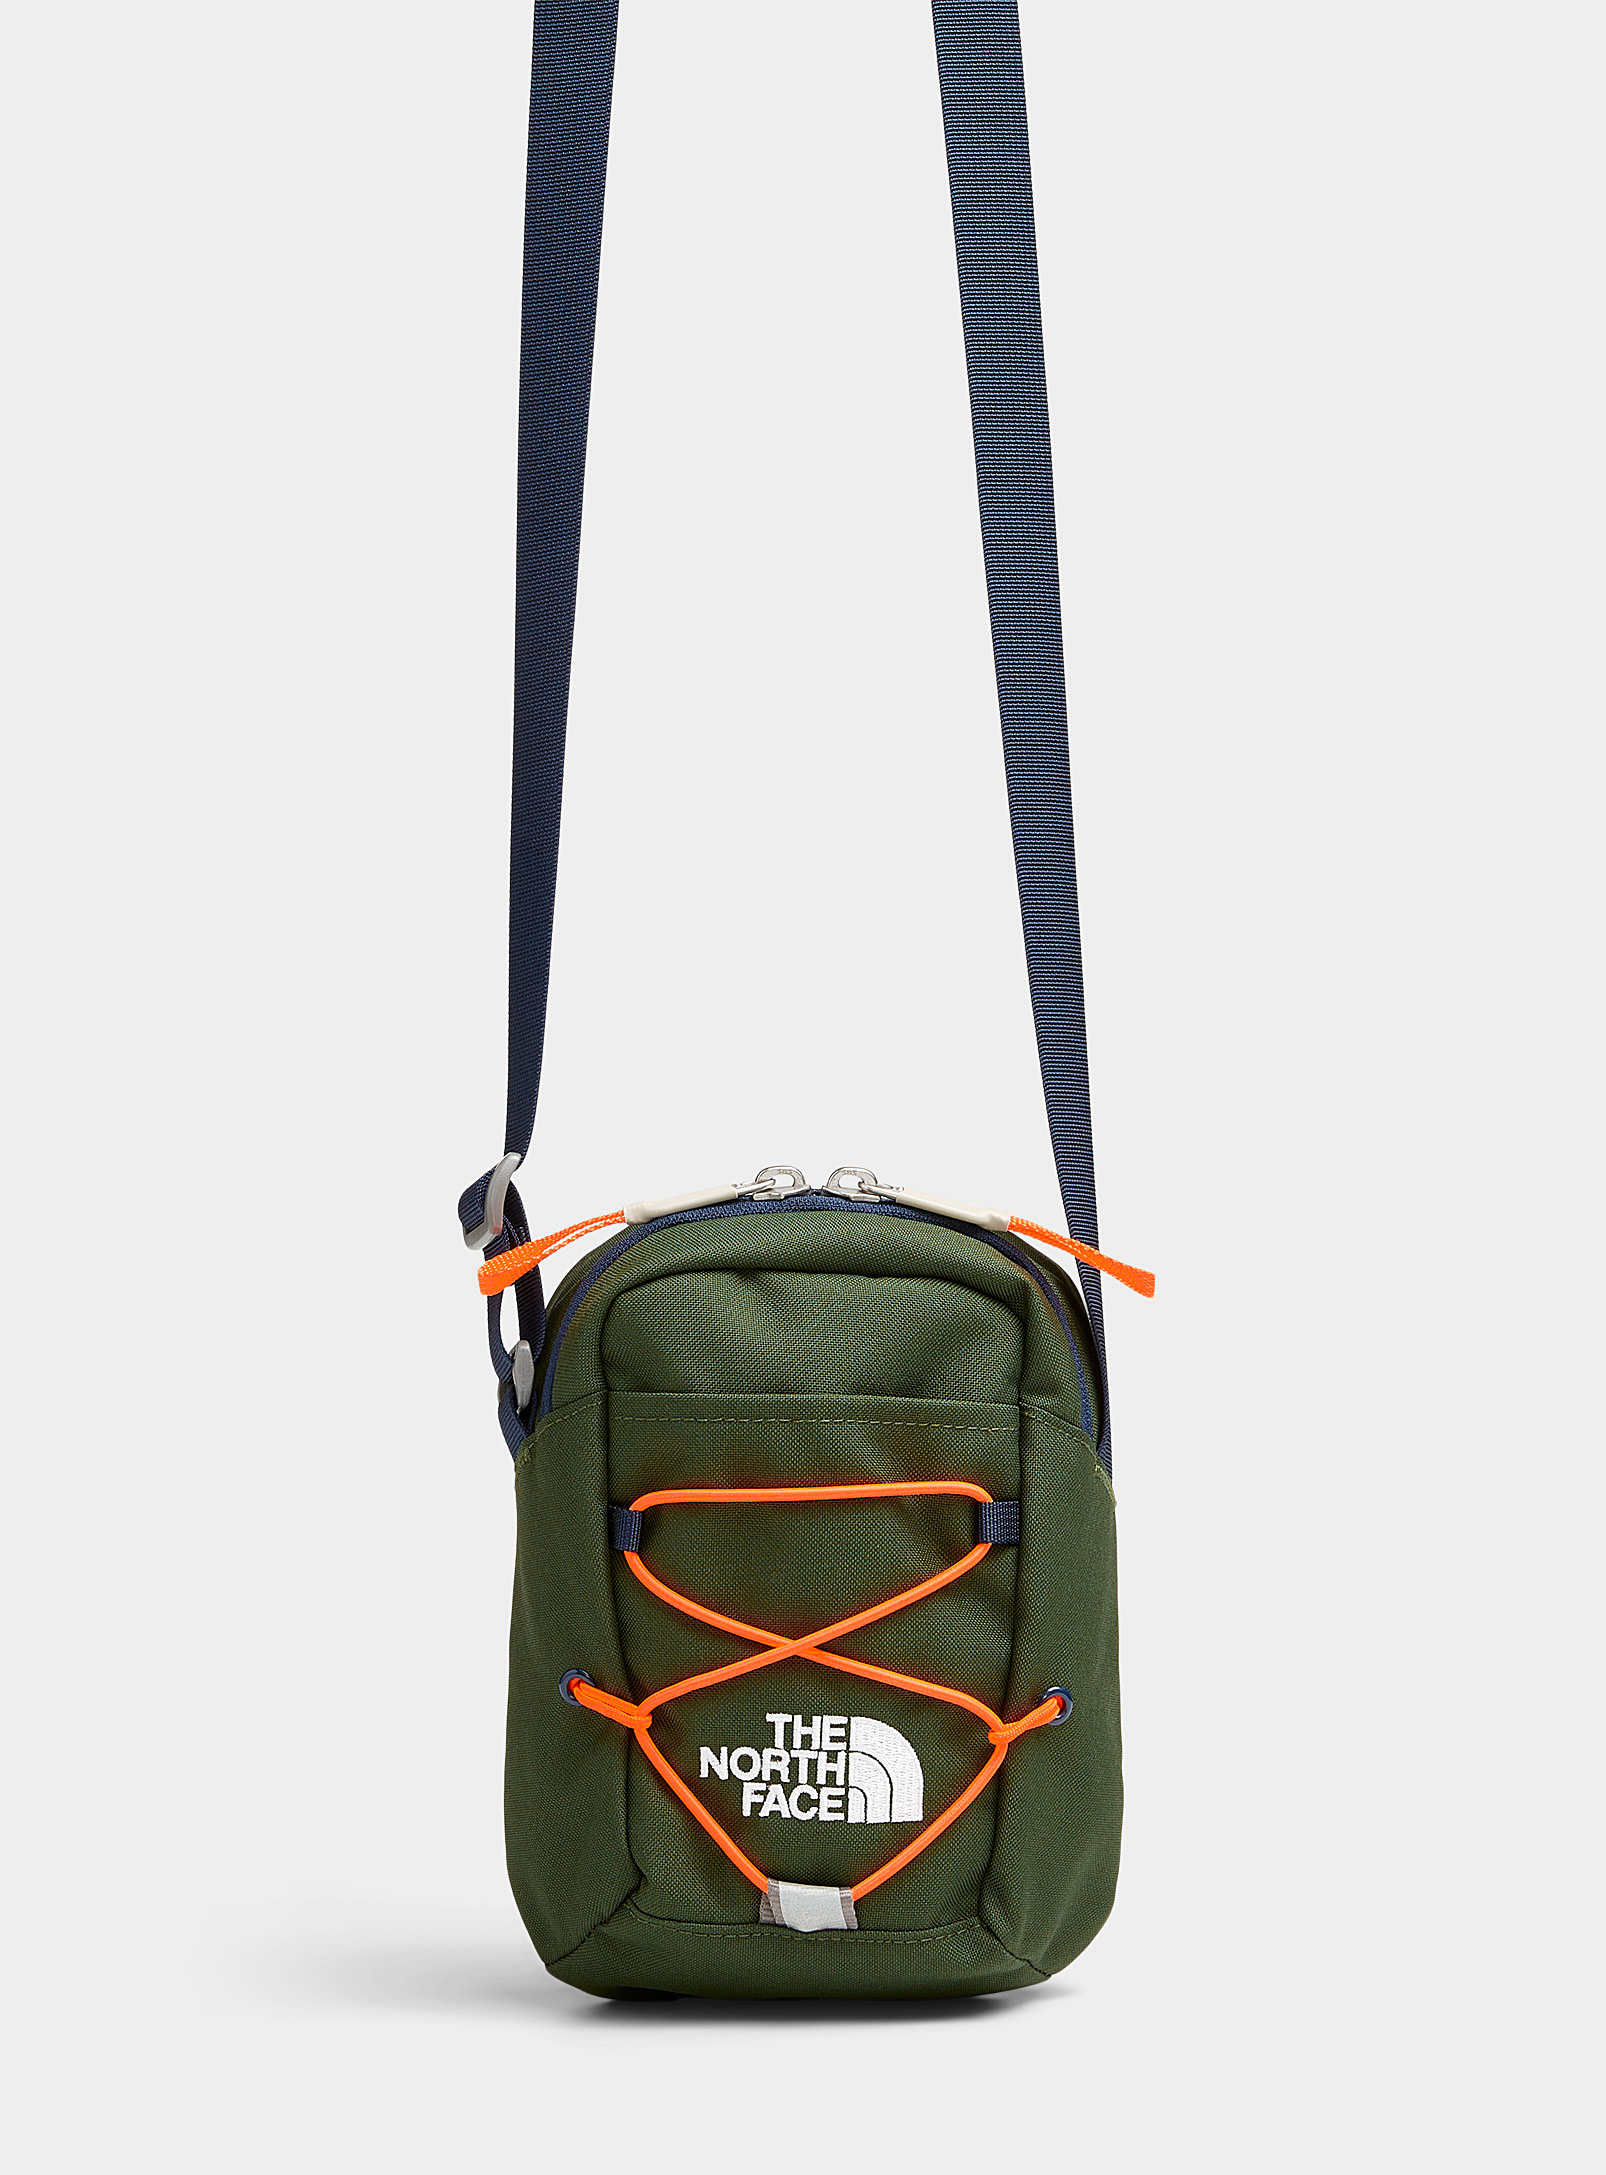 The North Face Jester Shoulder Bag In Green